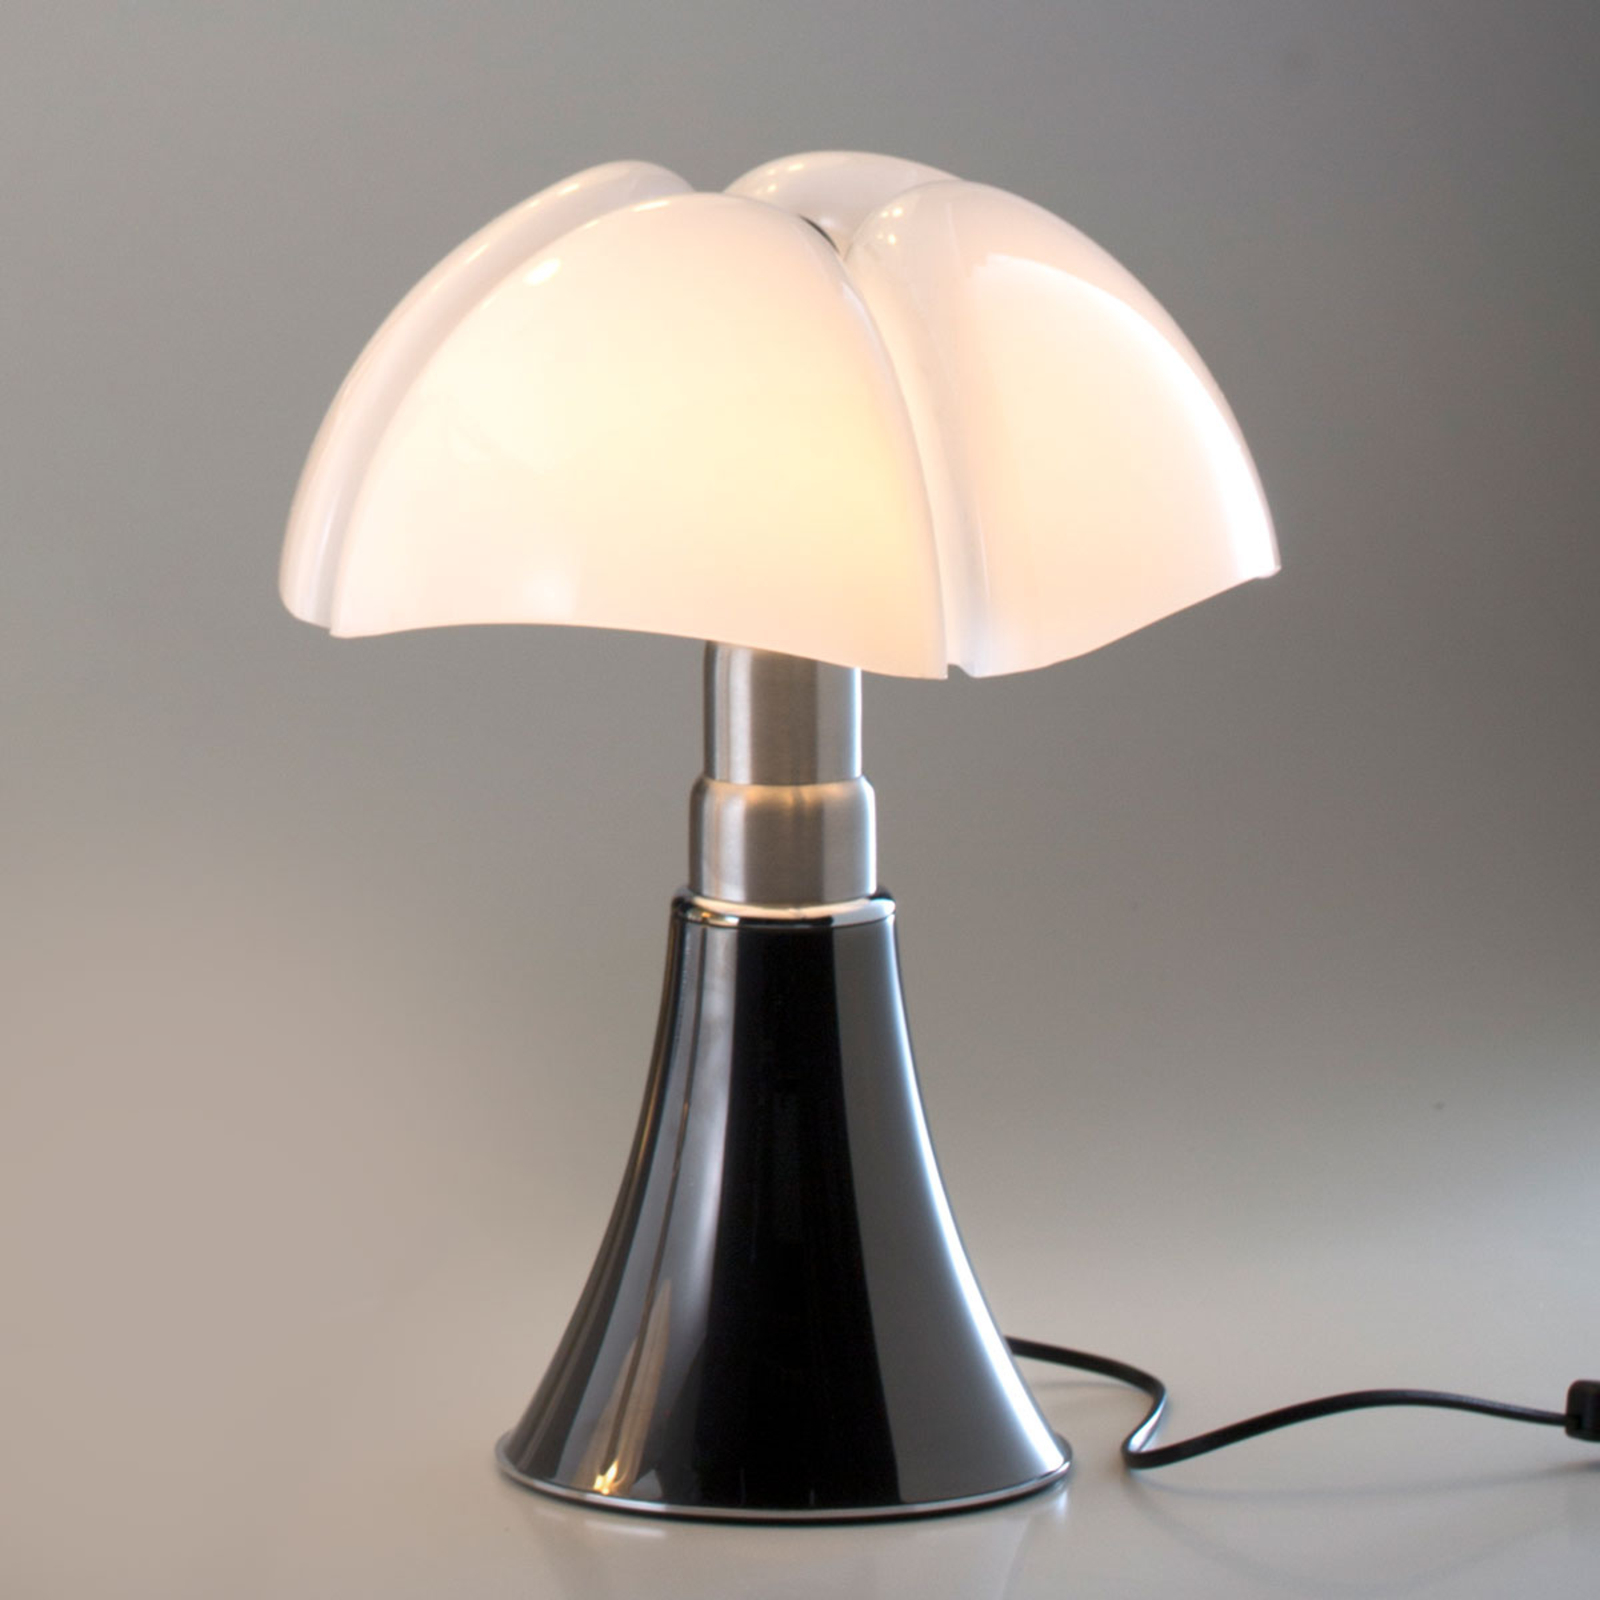 Minipipistrello table lamp titanium